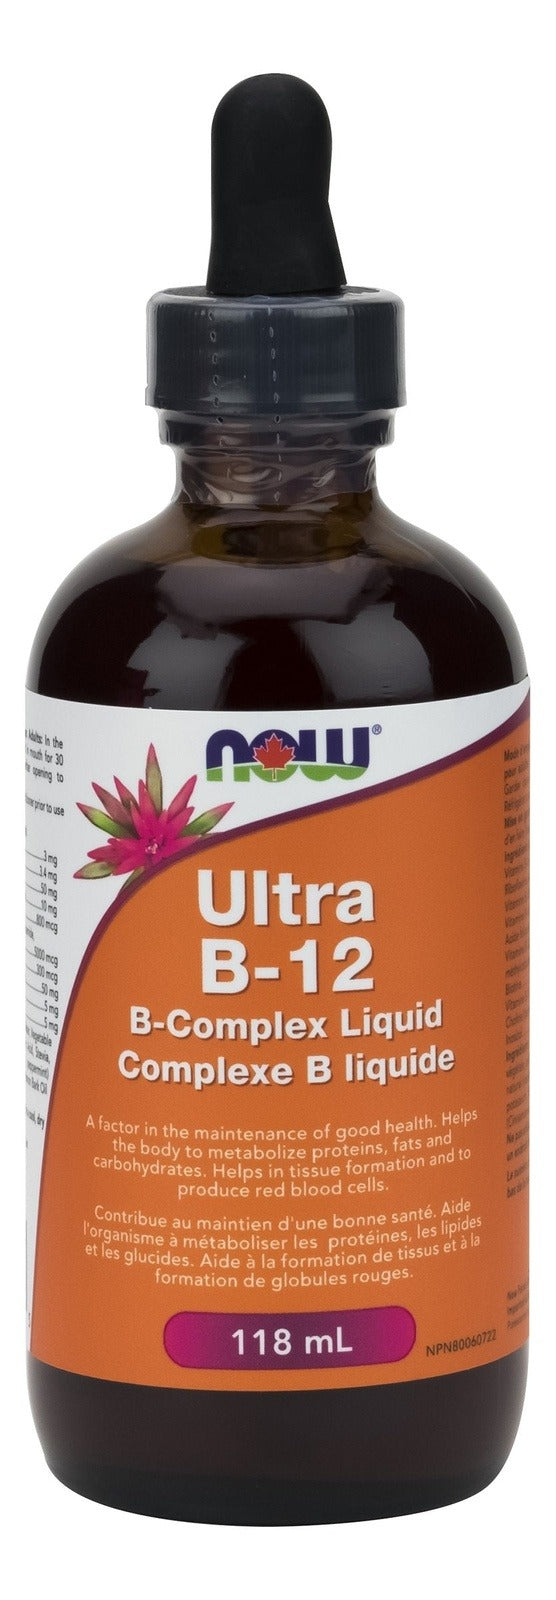 NOW Ultra B-12 B-Complex Liquid 118 mL Image 1